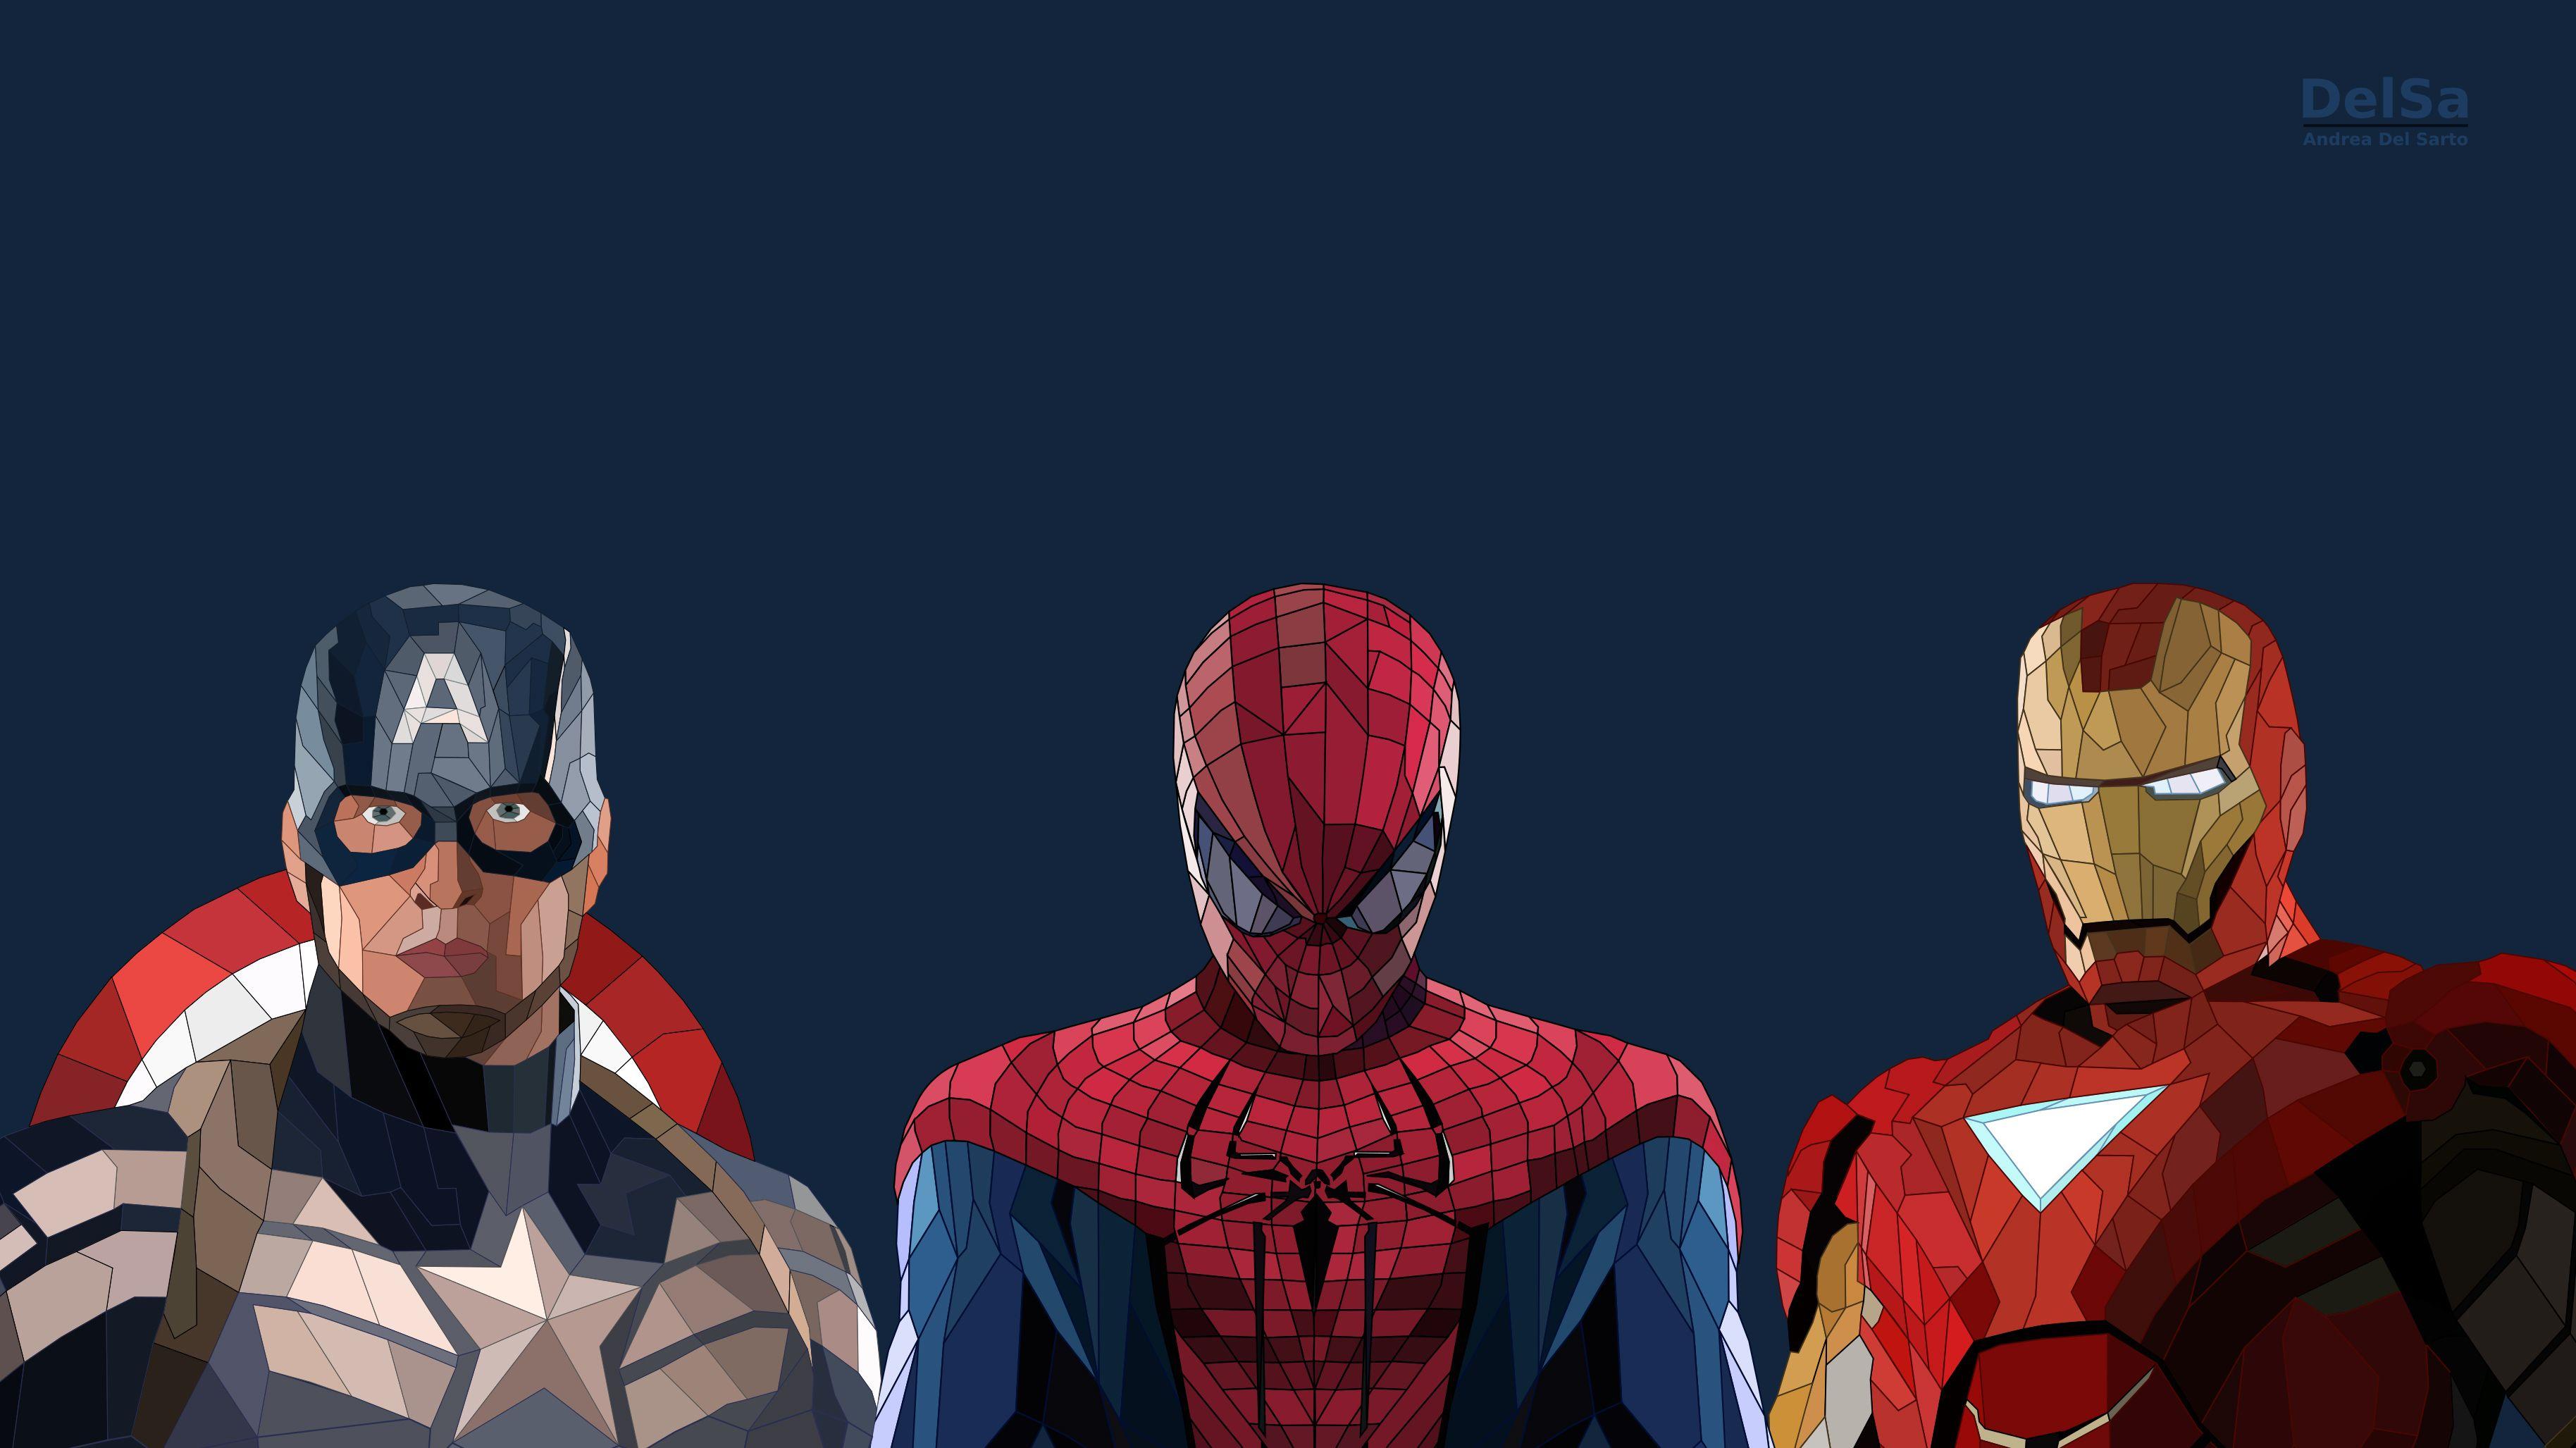 Spiderman Iron Man Captain America Low Poly Artwork, HD Superheroes